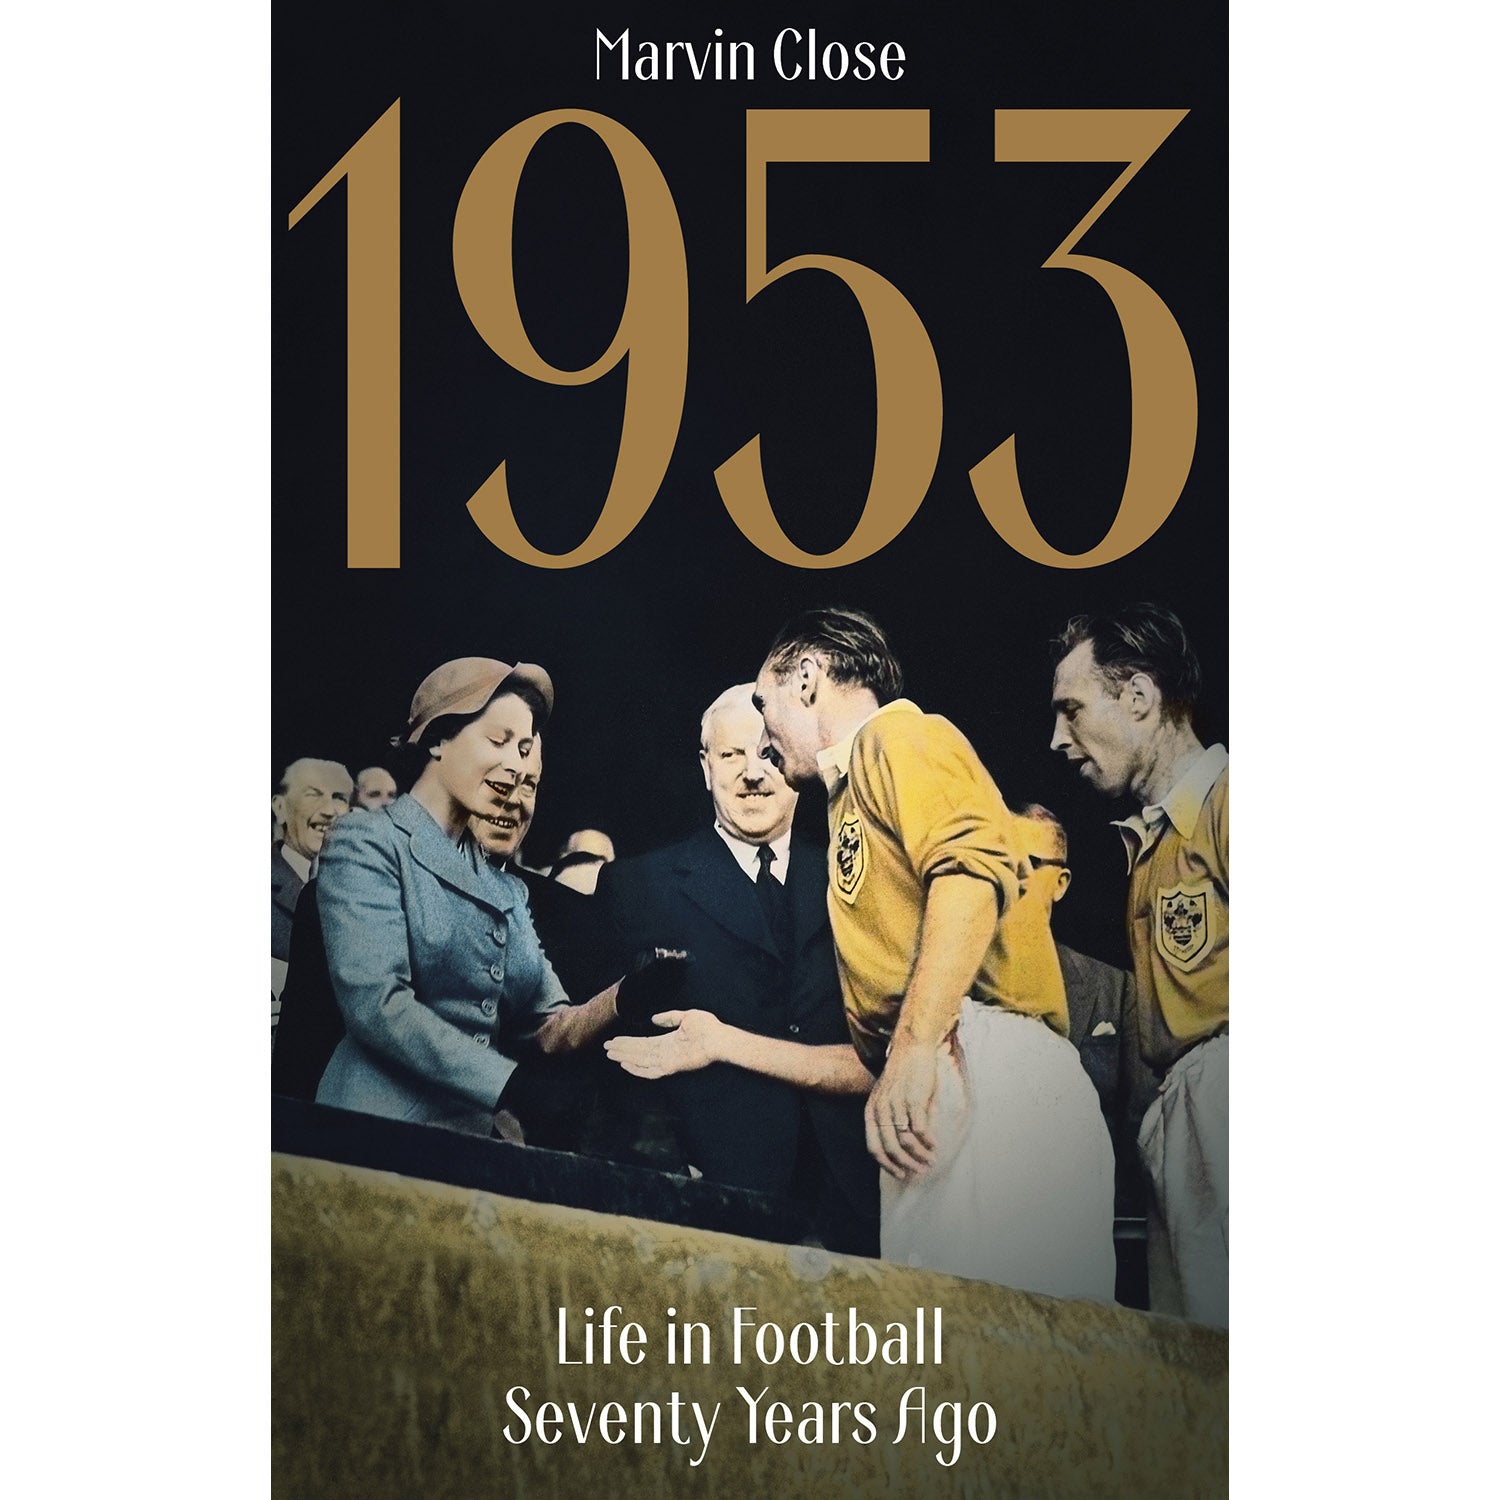 1953 – Life in Football Seventy Years Ago